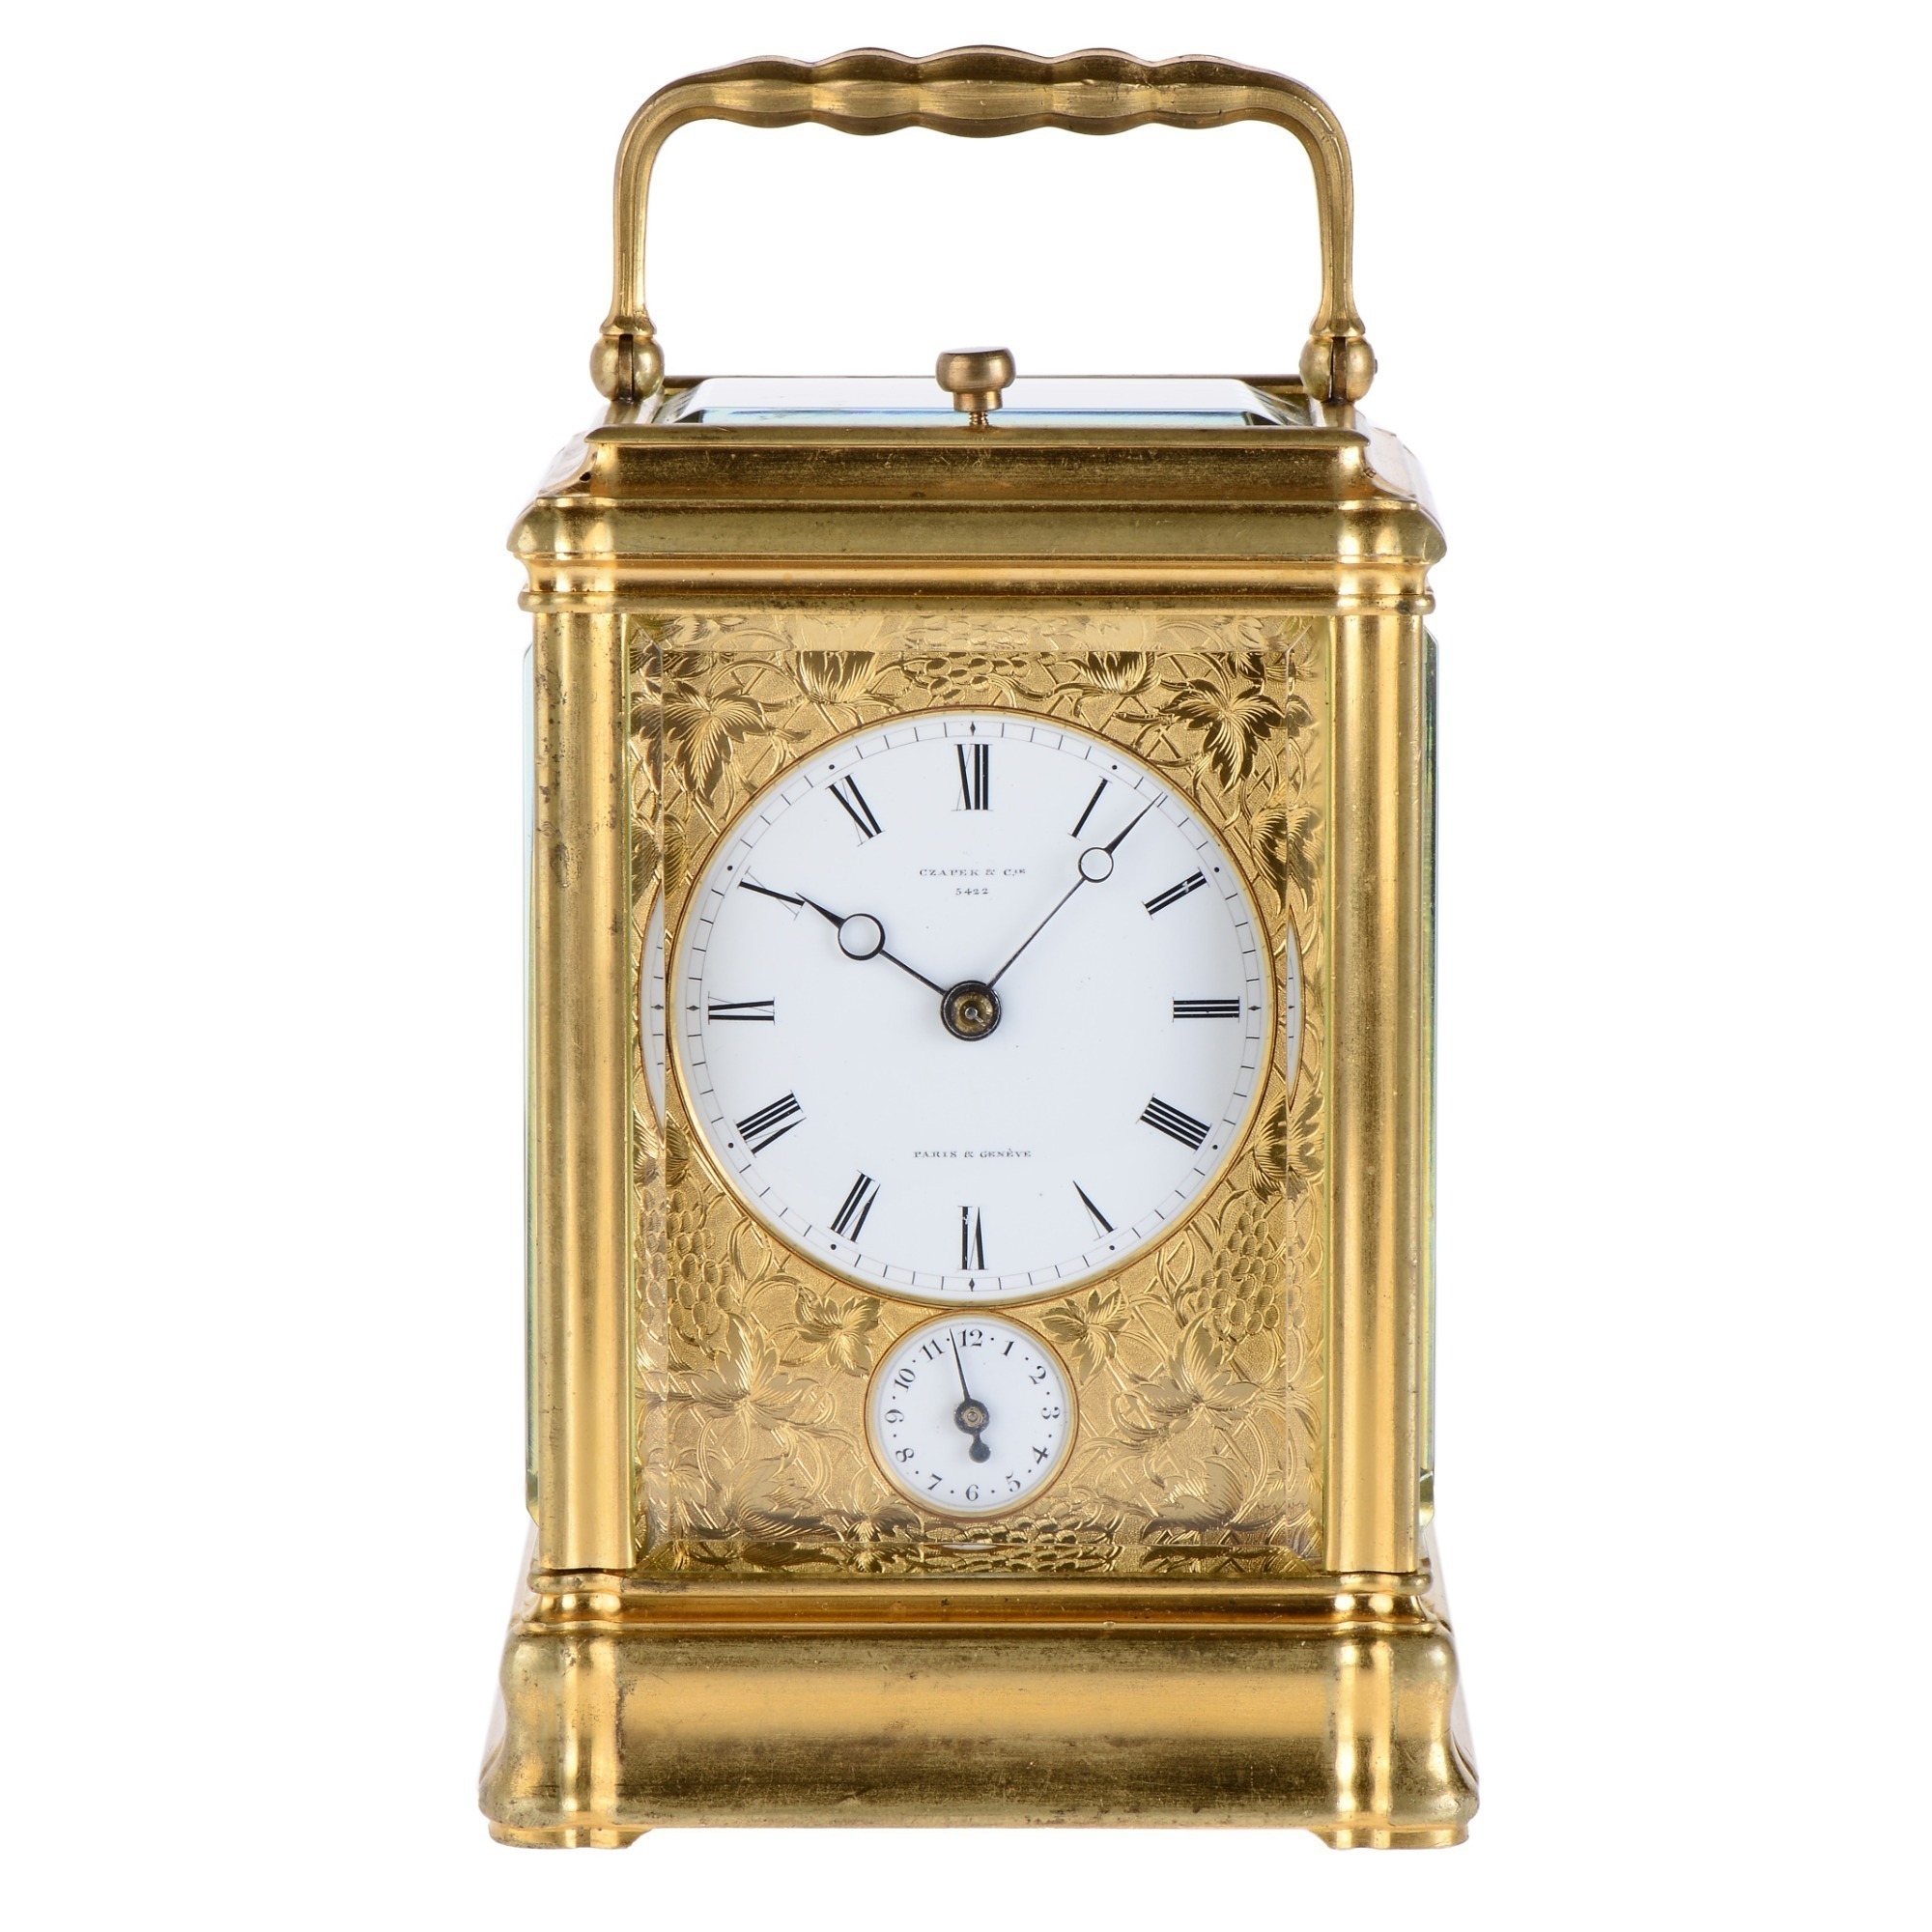 RARE Patek Philippe and Czapek Grande et Petite Sonnaire Repeater Carriage Clock With Alarm